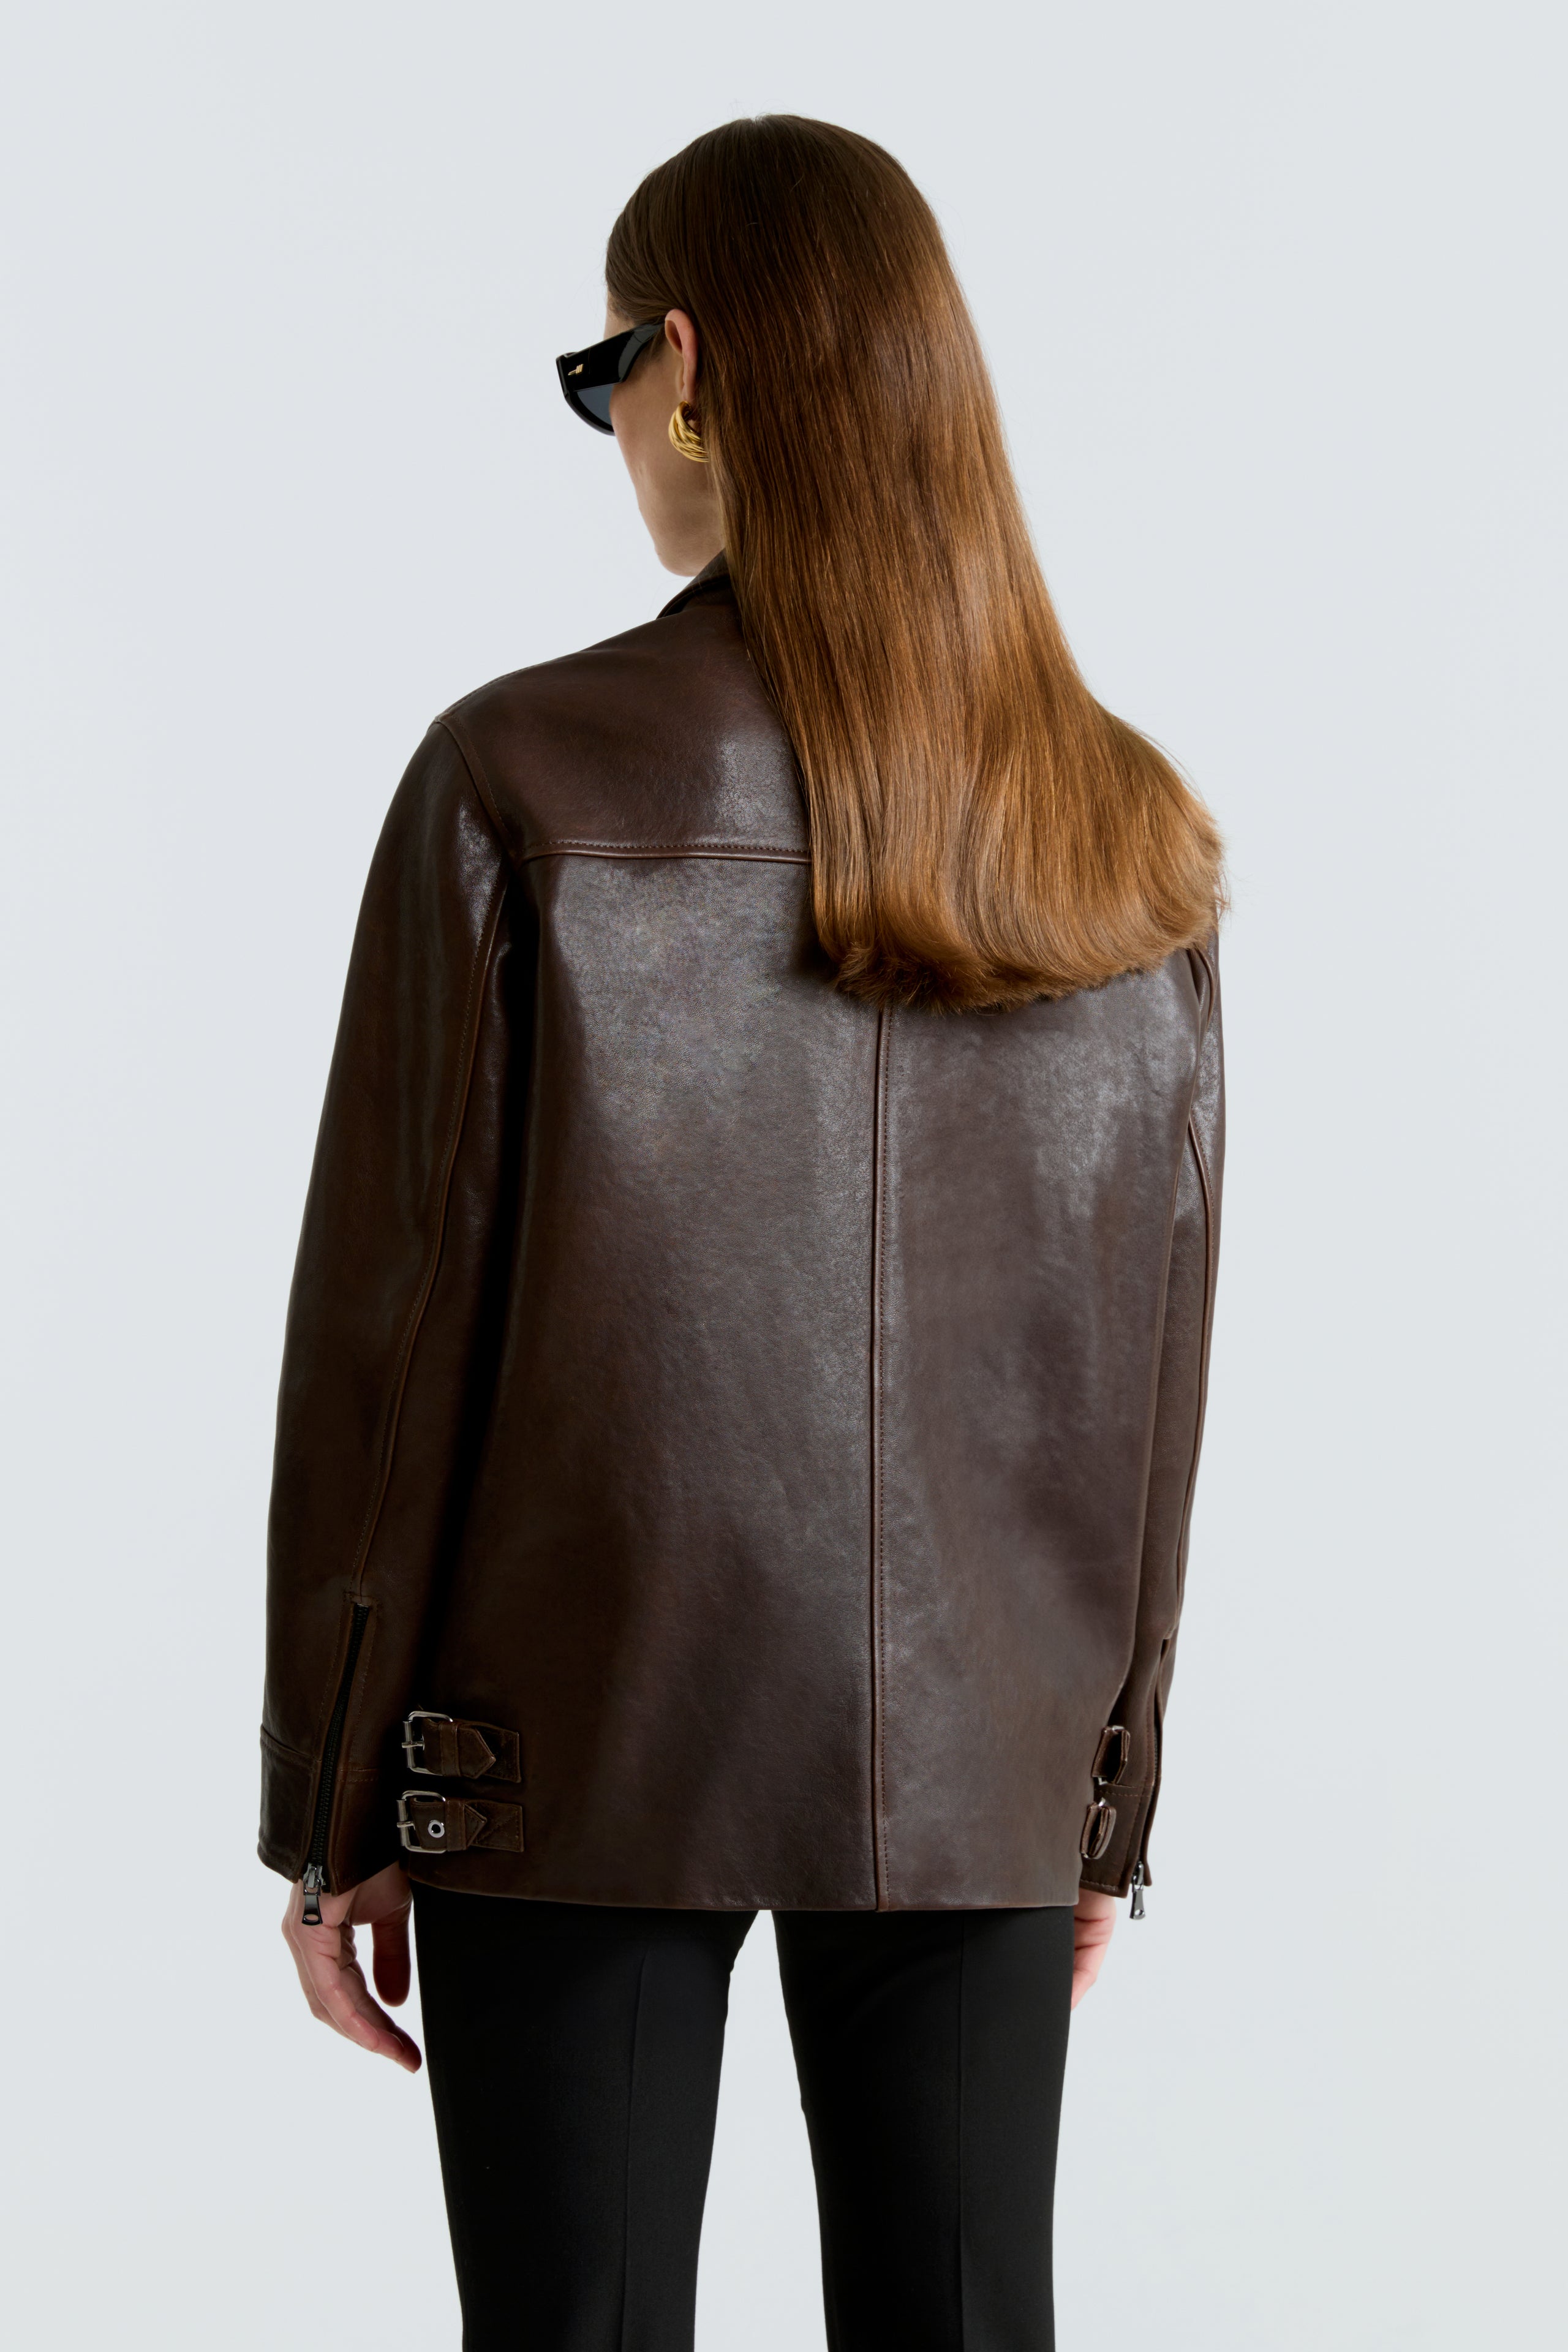 Model is wearing the Rayan Dark Brown Utilitarian Leather Jacket Back